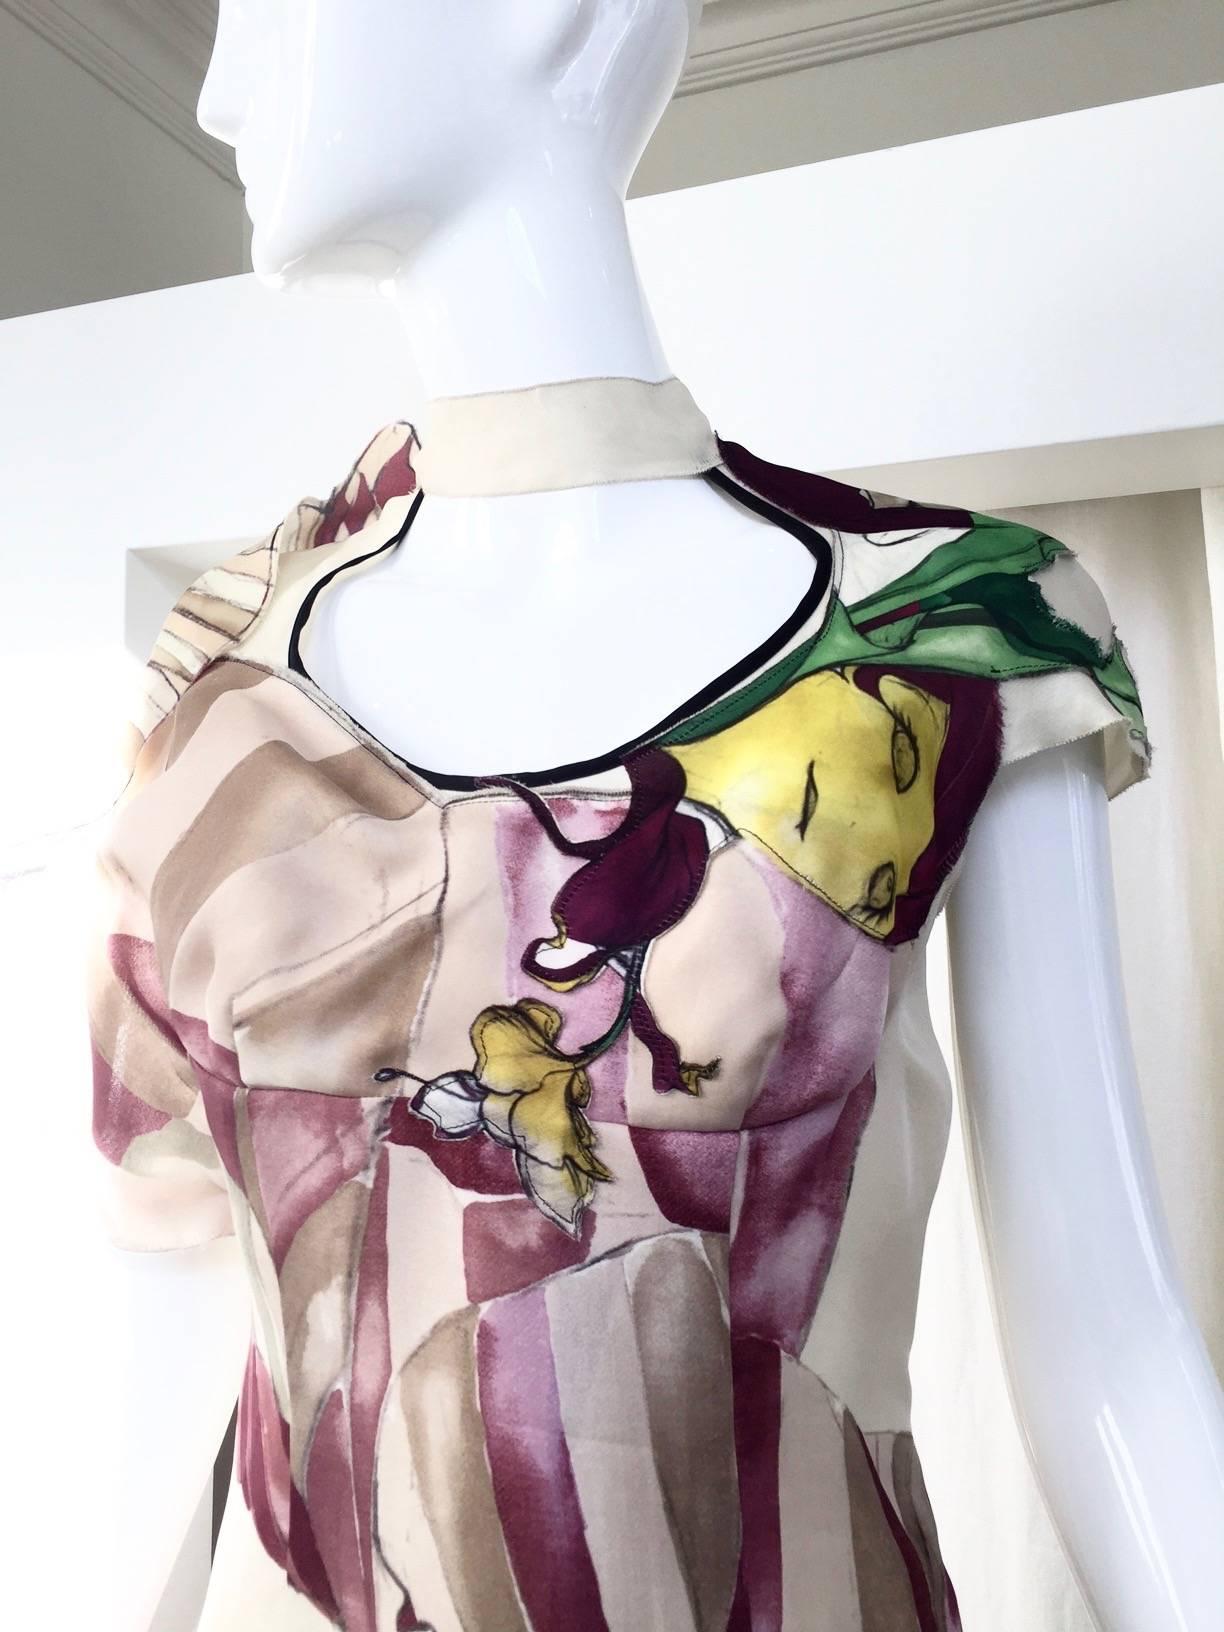 Iconic  2008 Prada fairy silk print runway  dress. 
Size: 38/size 0 or 2. 
Measurement:
Bust: 30.5